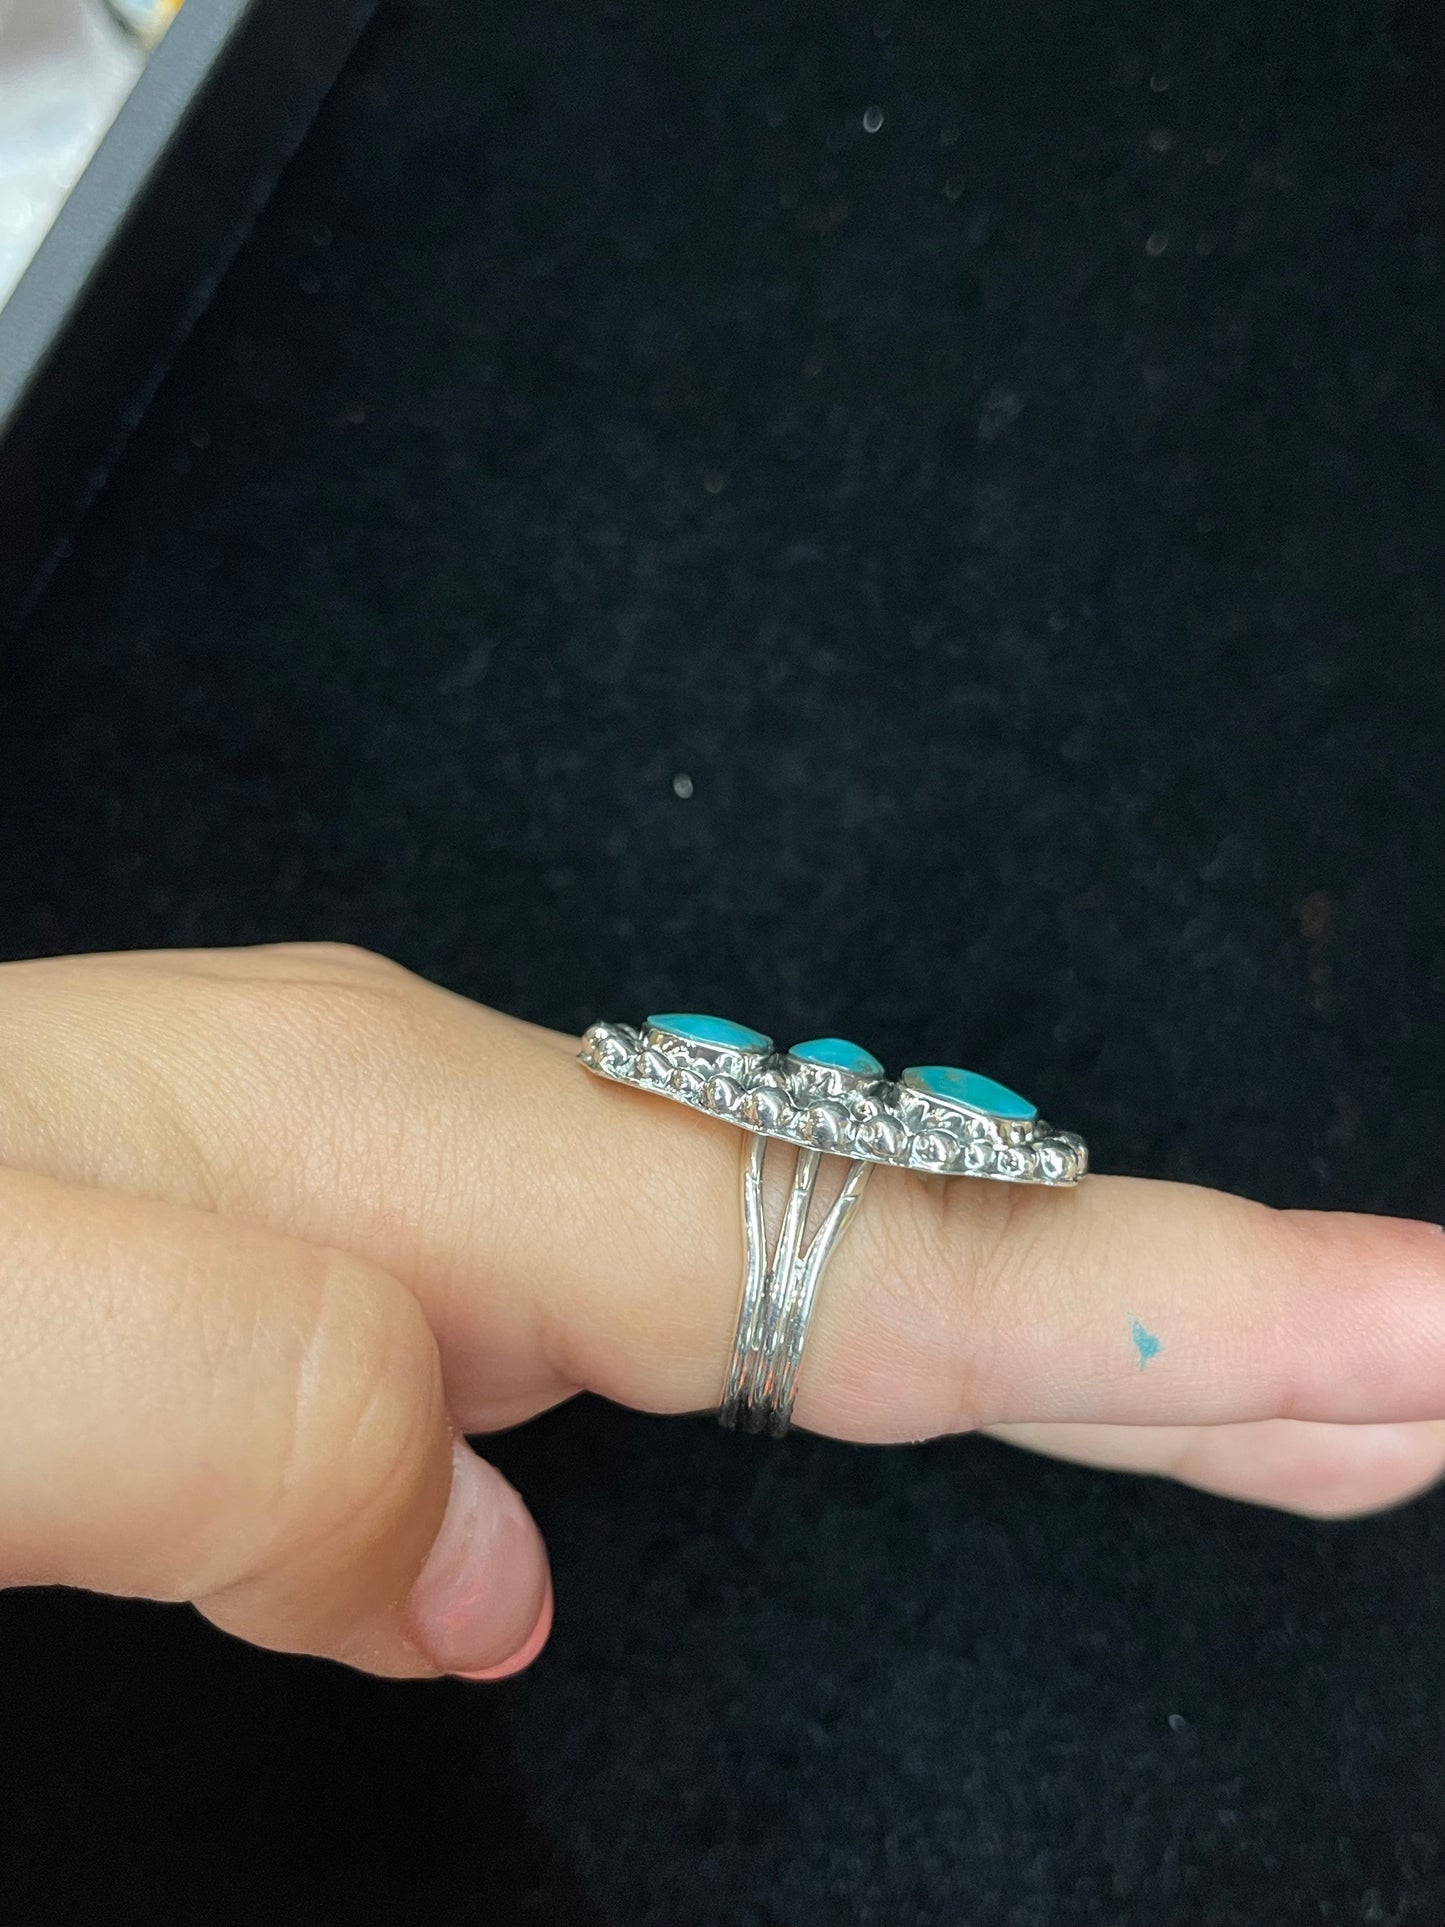 9.0 Three Stone Turquoise Ring by Ryntanna Yazzie, Navajo